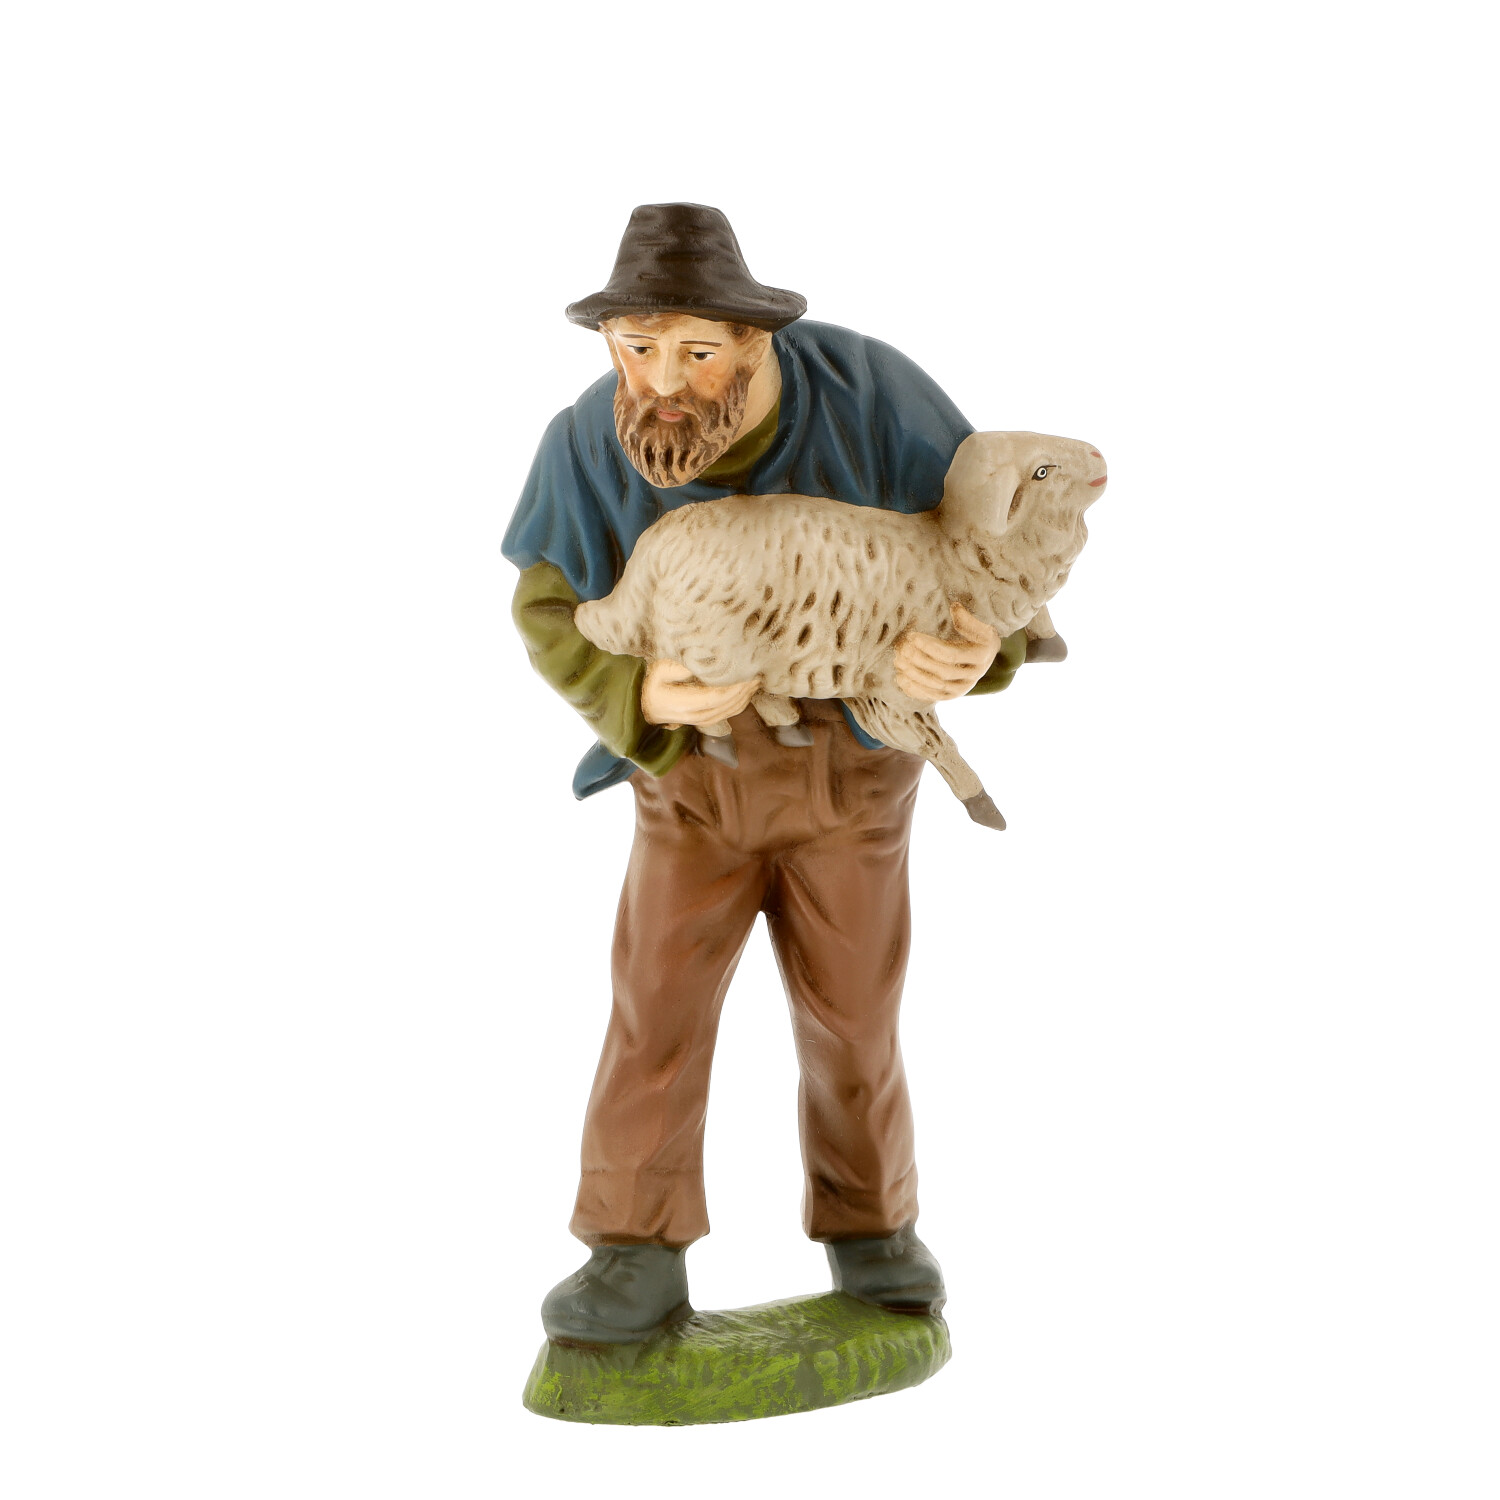 Shepherd with sheep in arm - Marolin Nativity figure - made in Germany